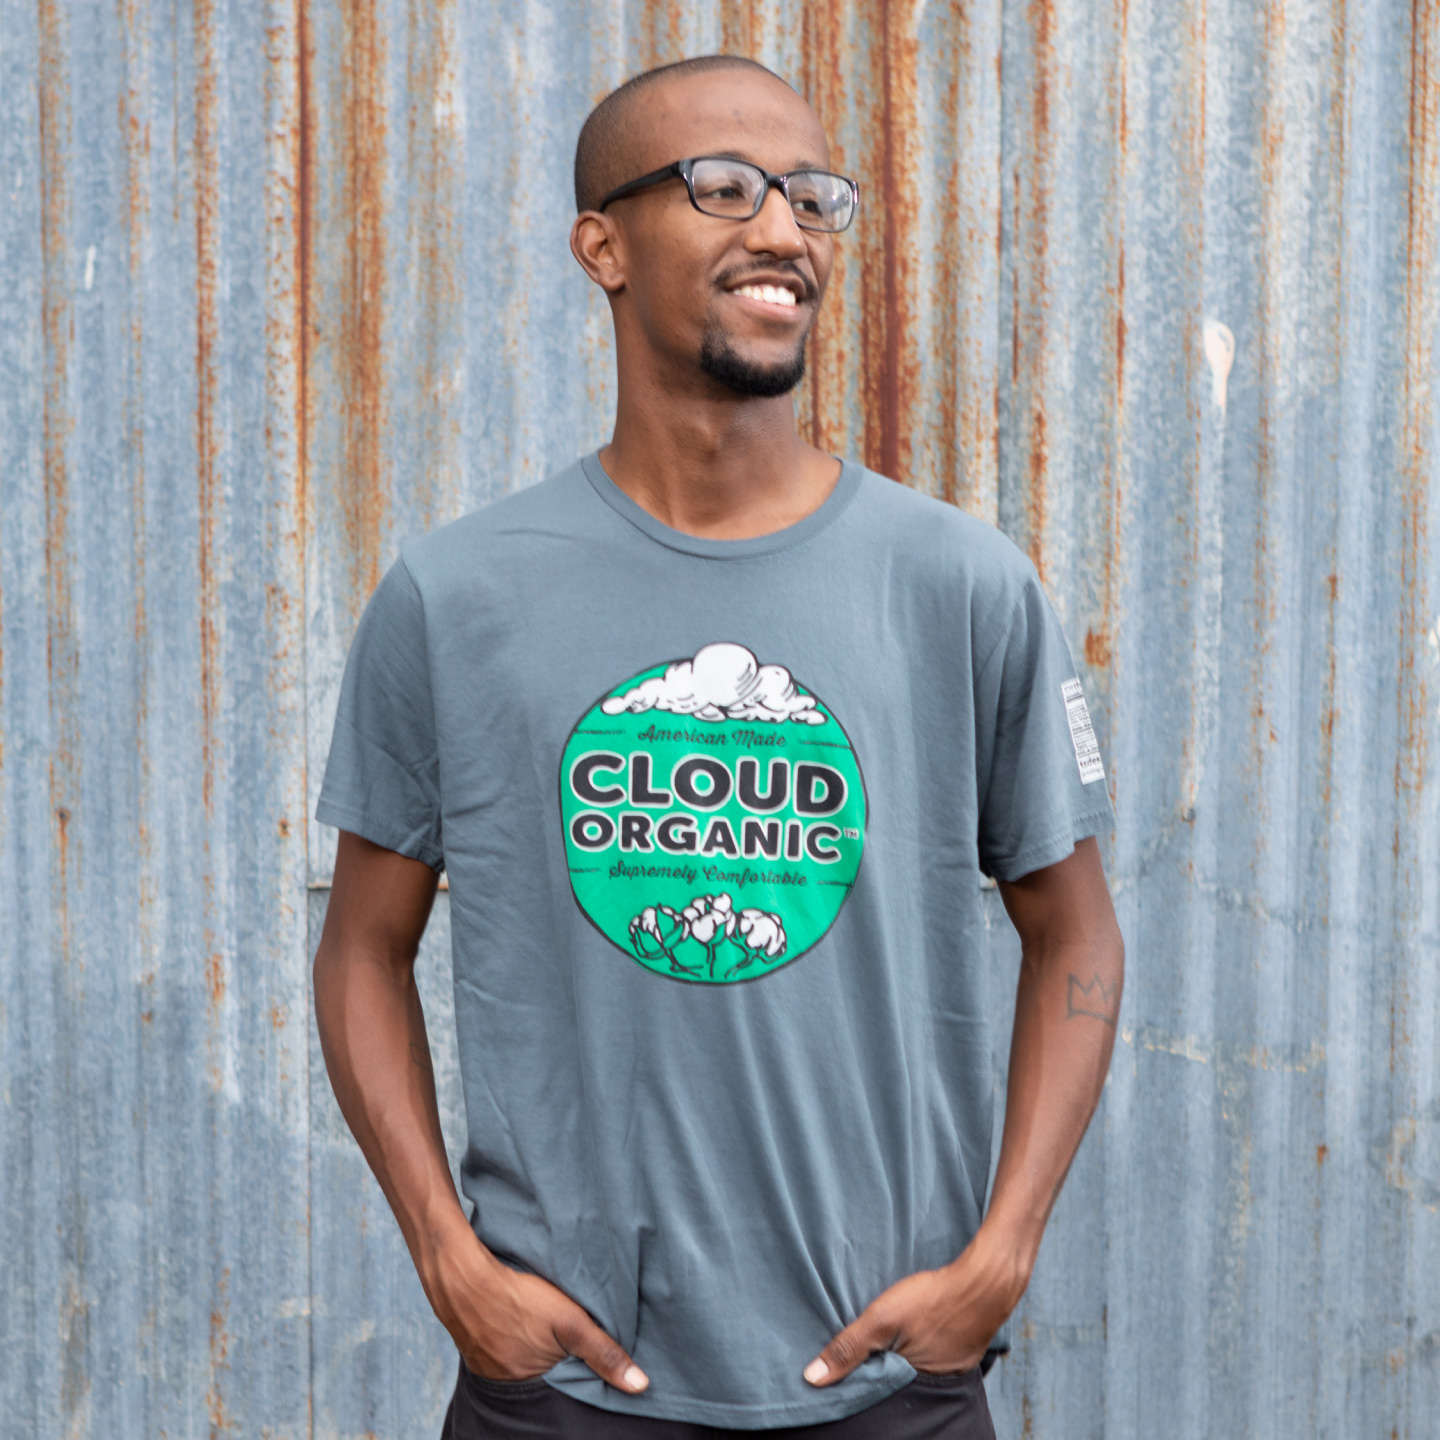 Cloud Organic Shirt | TS Designs